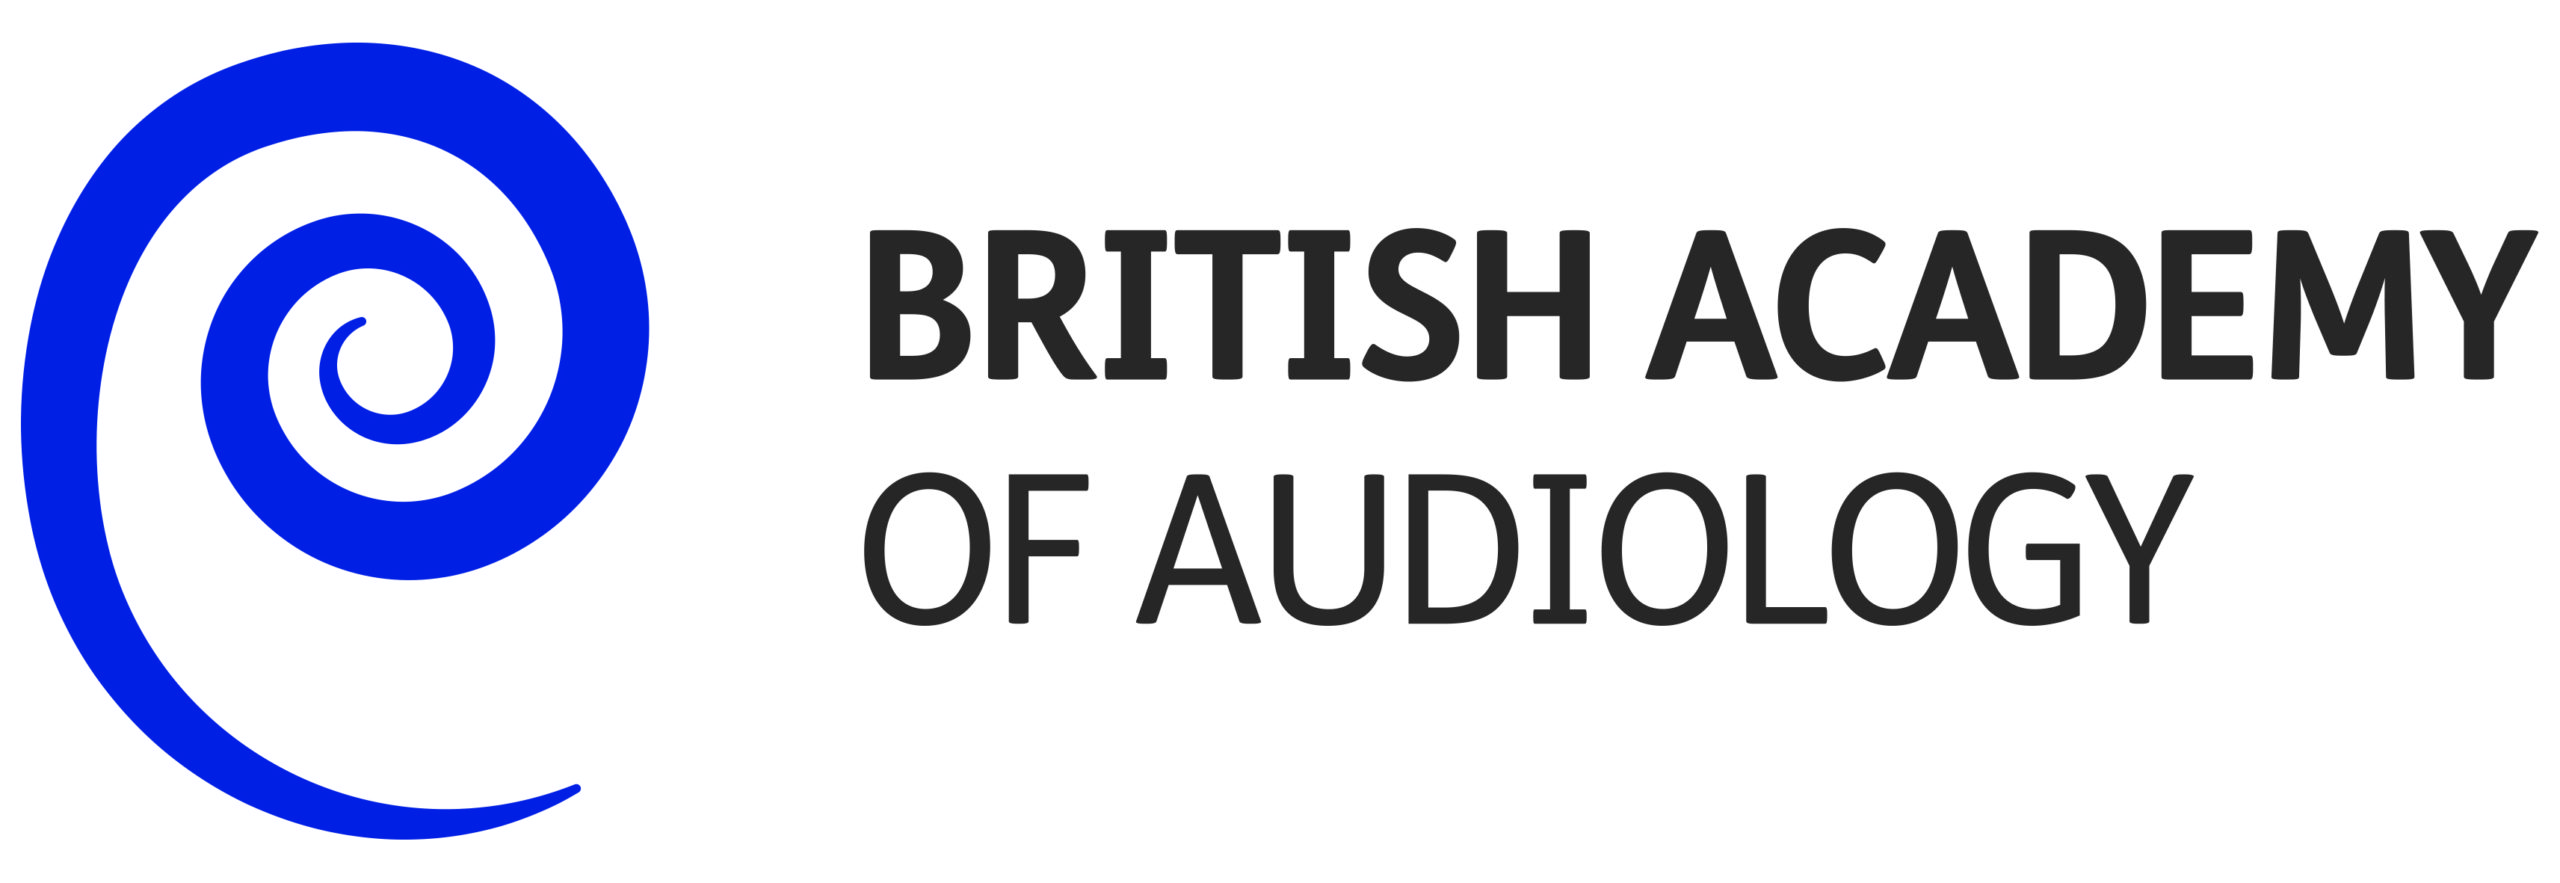 British Academy of Audiology Logo